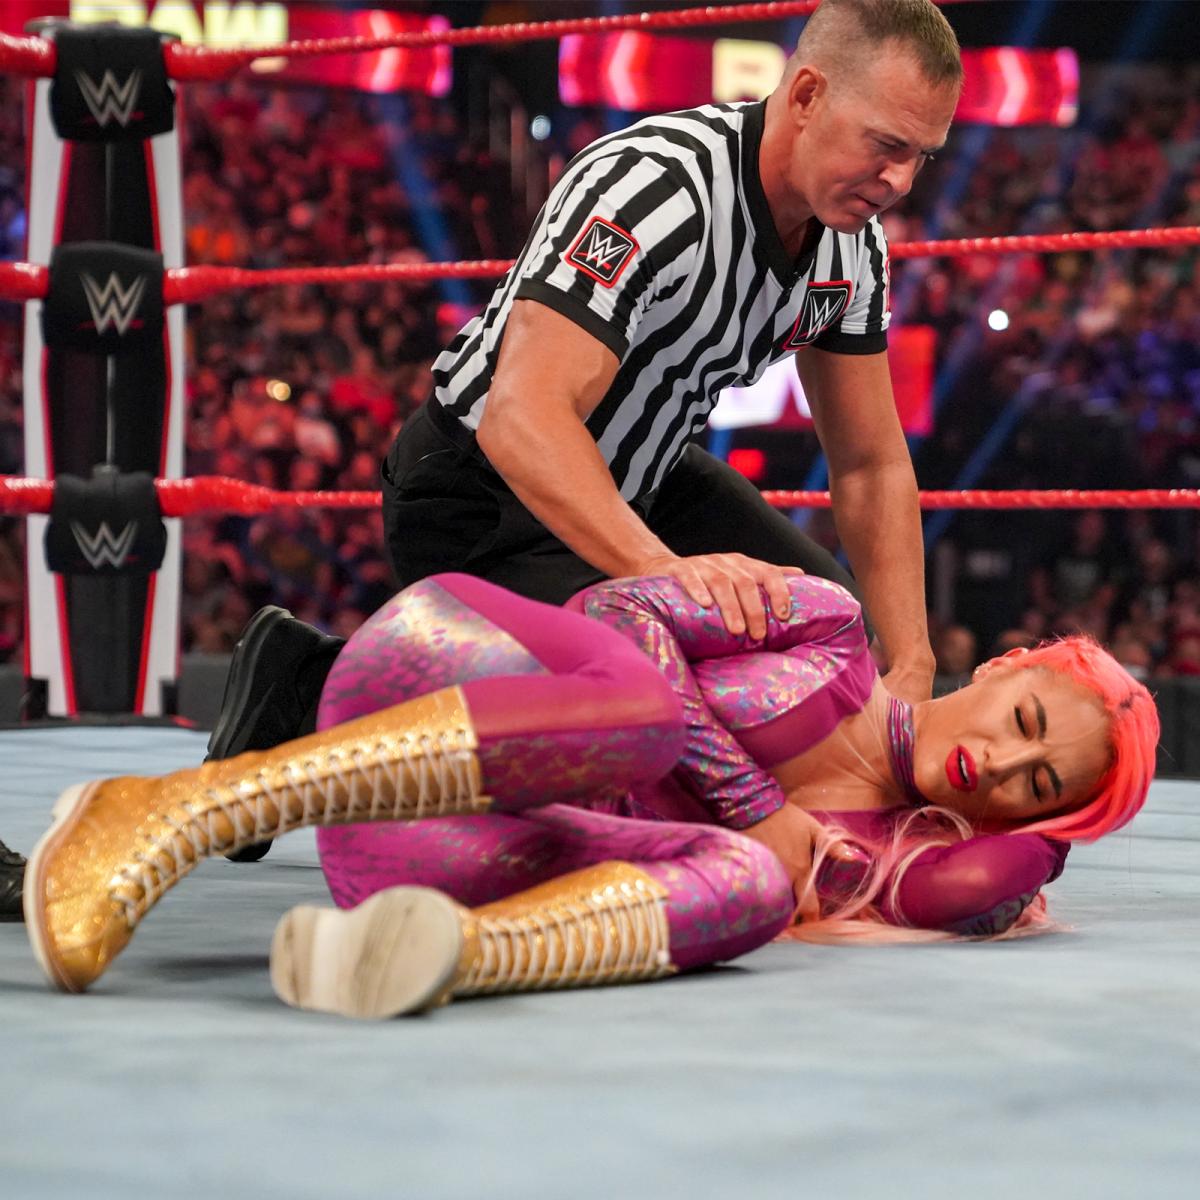 Eva Marie made a shock return to WWE in 2021